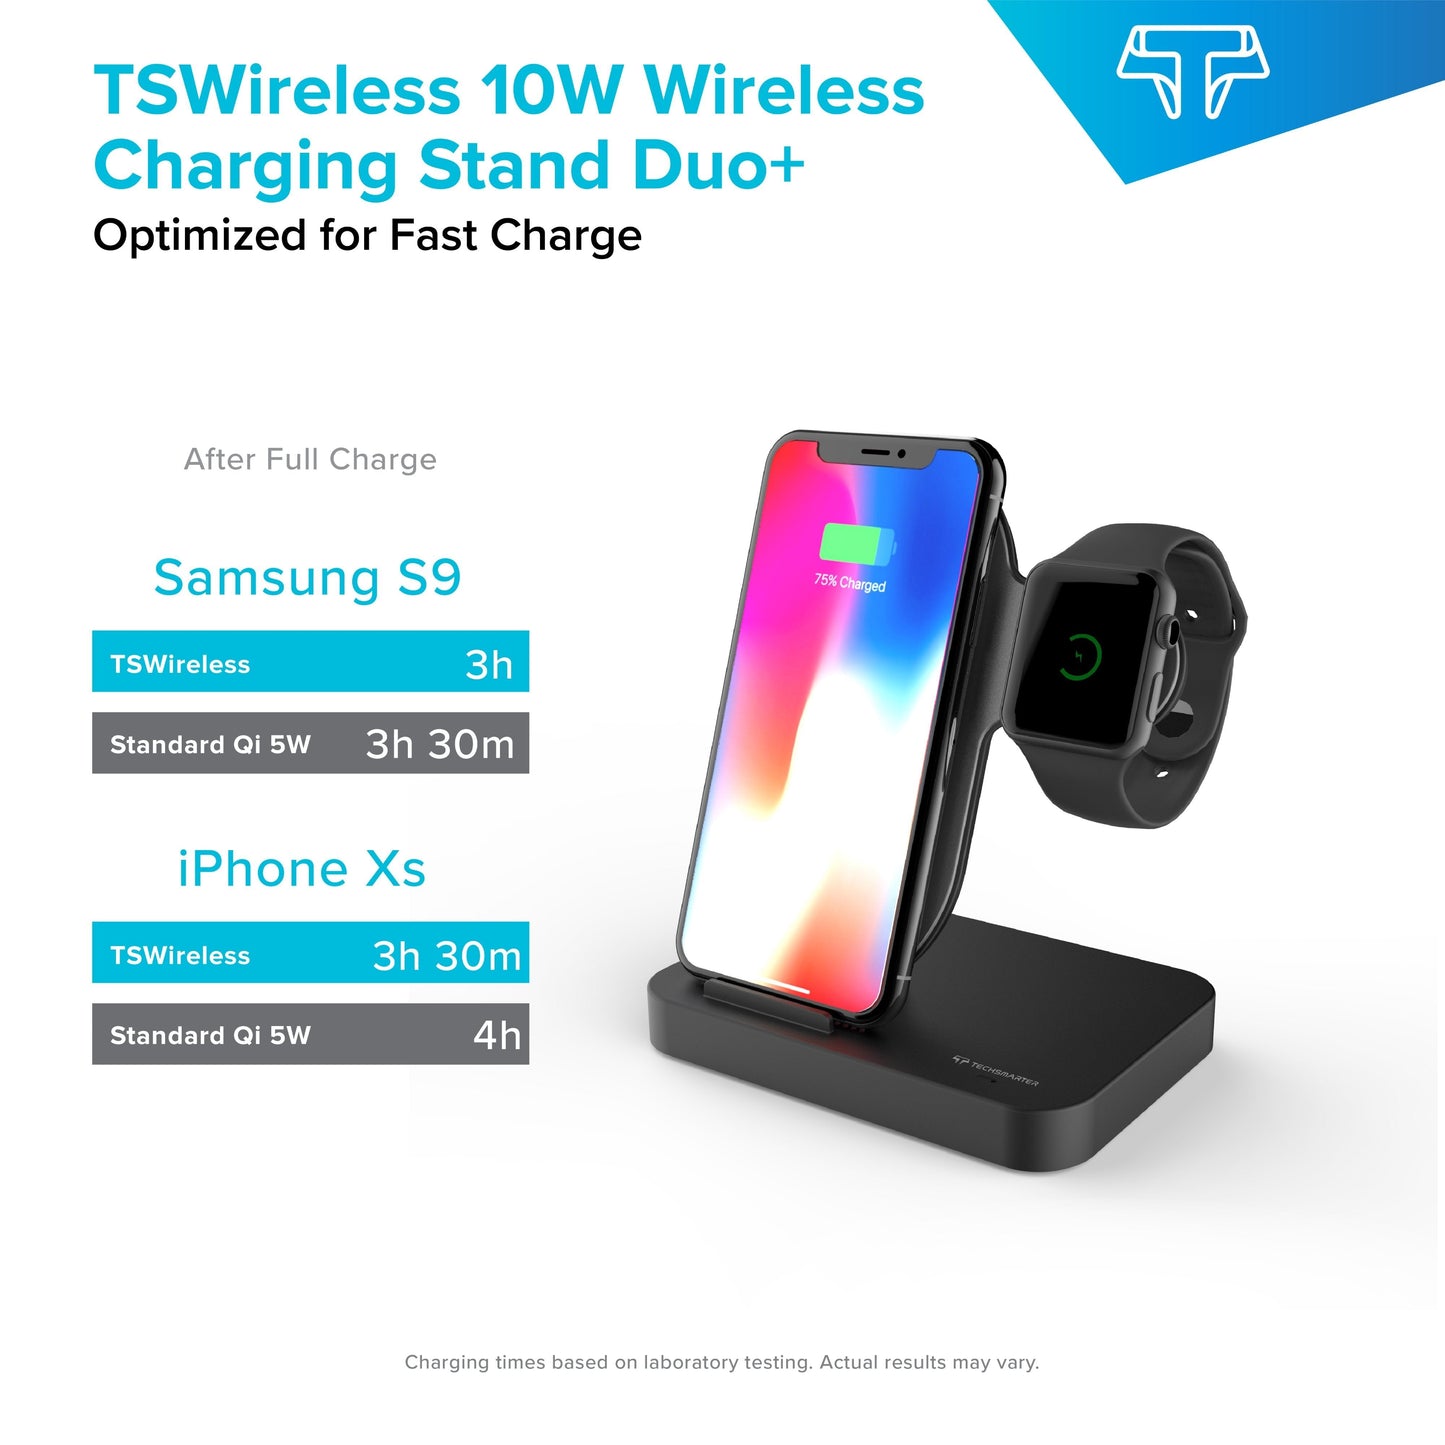 TSWireless 10W Wireless Charger & Dock - TechsmarterTechsmarterCharging Stand